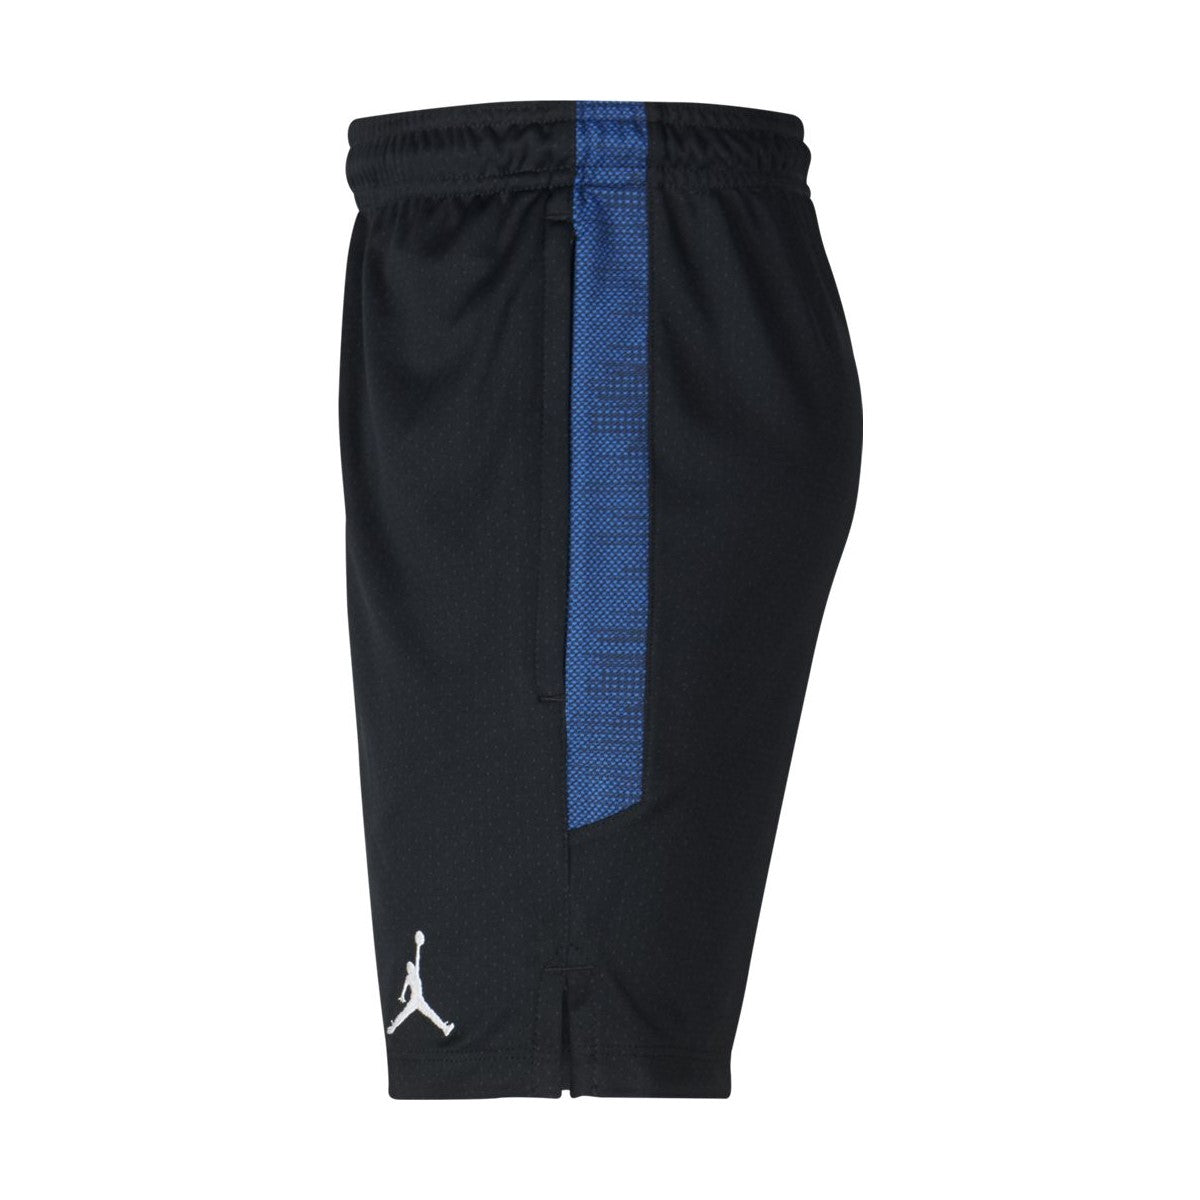 Air Jordan PSG Basketball Short